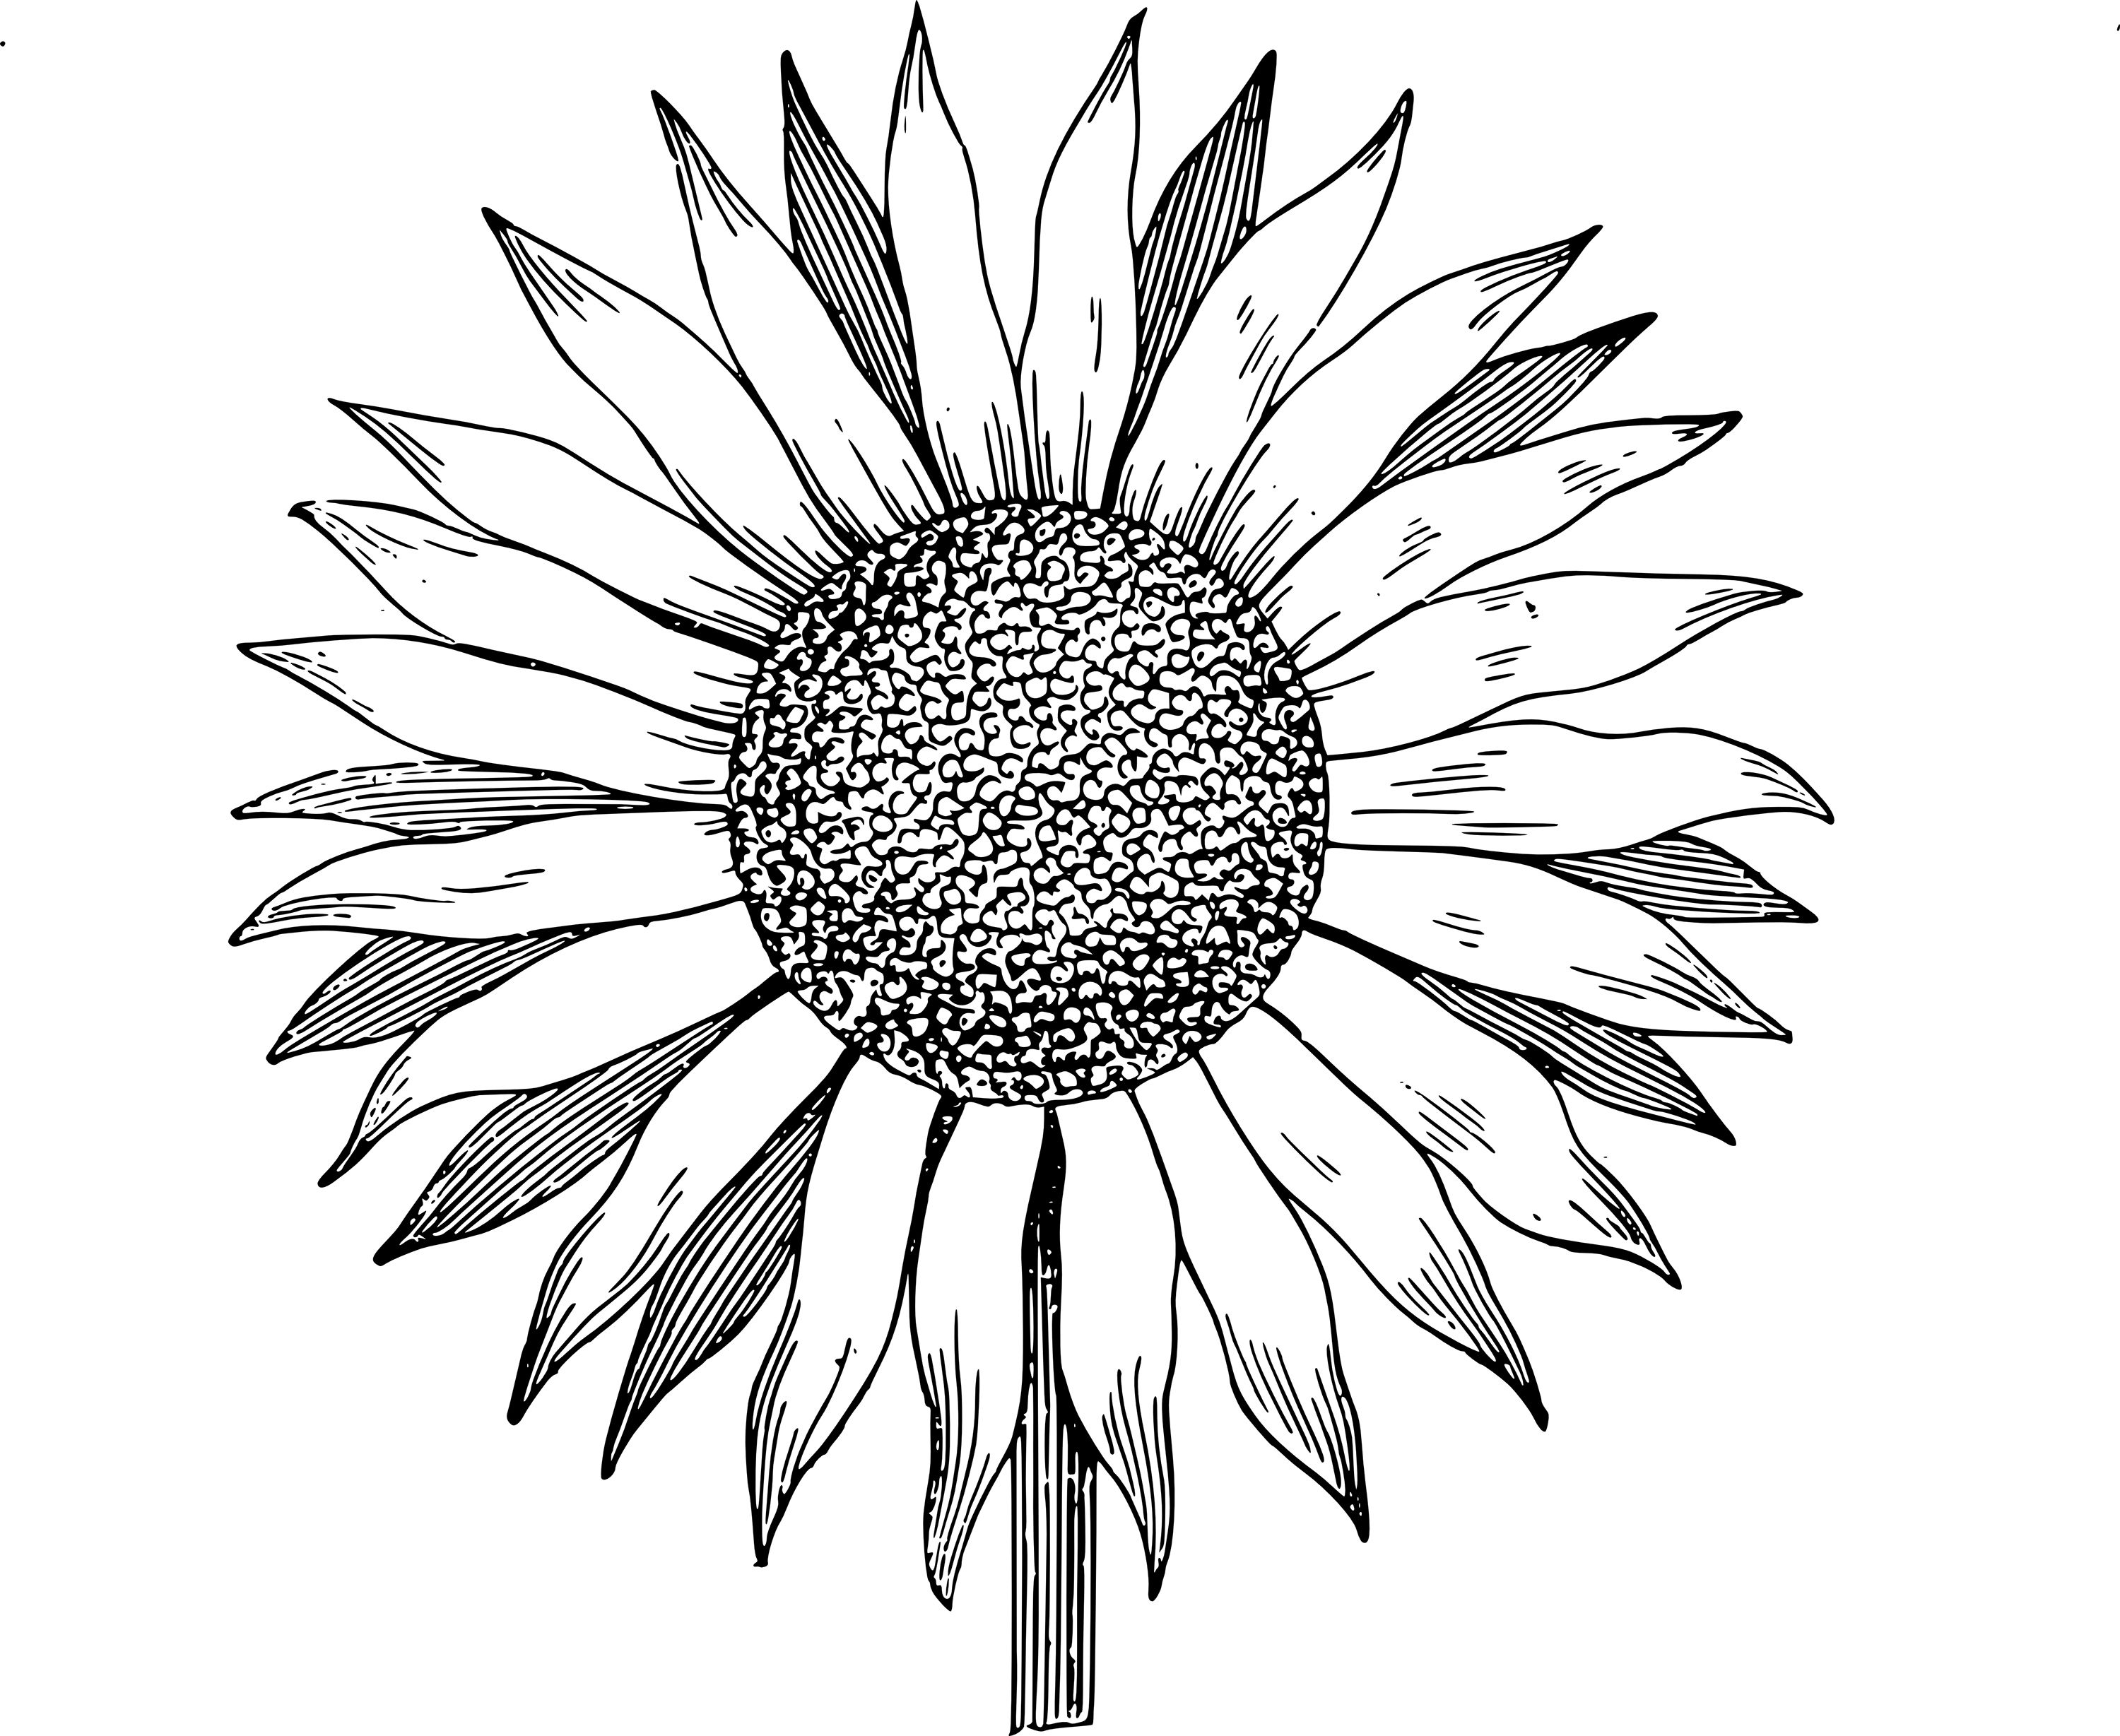 Sunflowers in monochrome photo